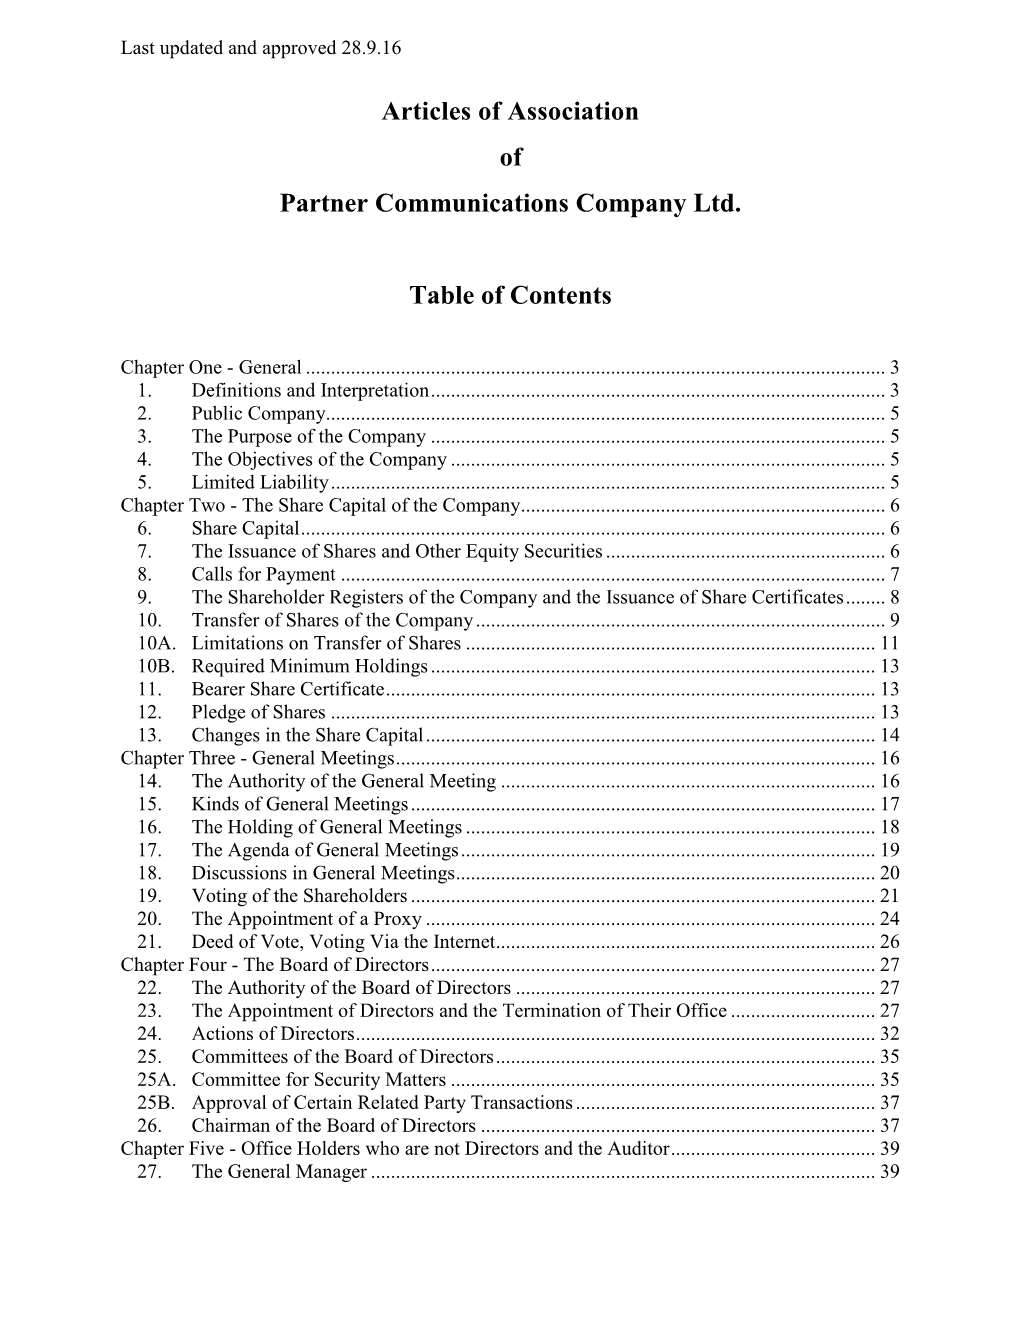 Articles of Association of Partner Communications Company Ltd